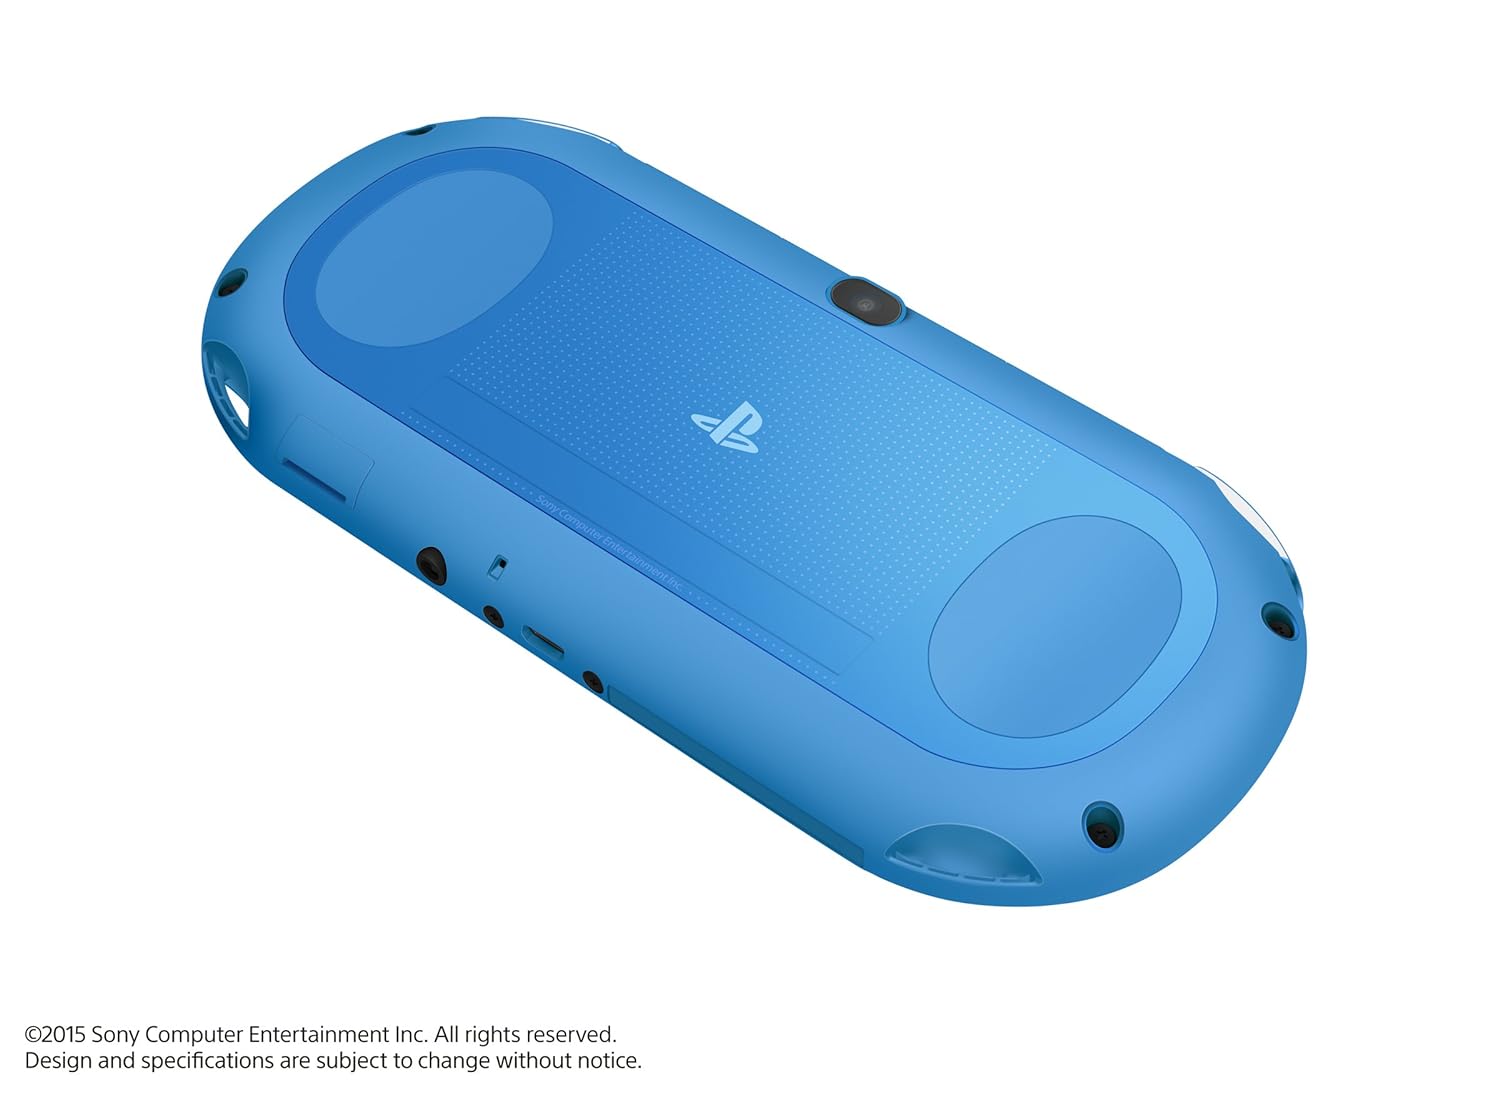 Sony PlayStation Vita 2000 Wi-Fi (Aqua Blue) - (PSV) PlayStation Vita [Pre-Owned] (Japanese Import) Consoles Sony   